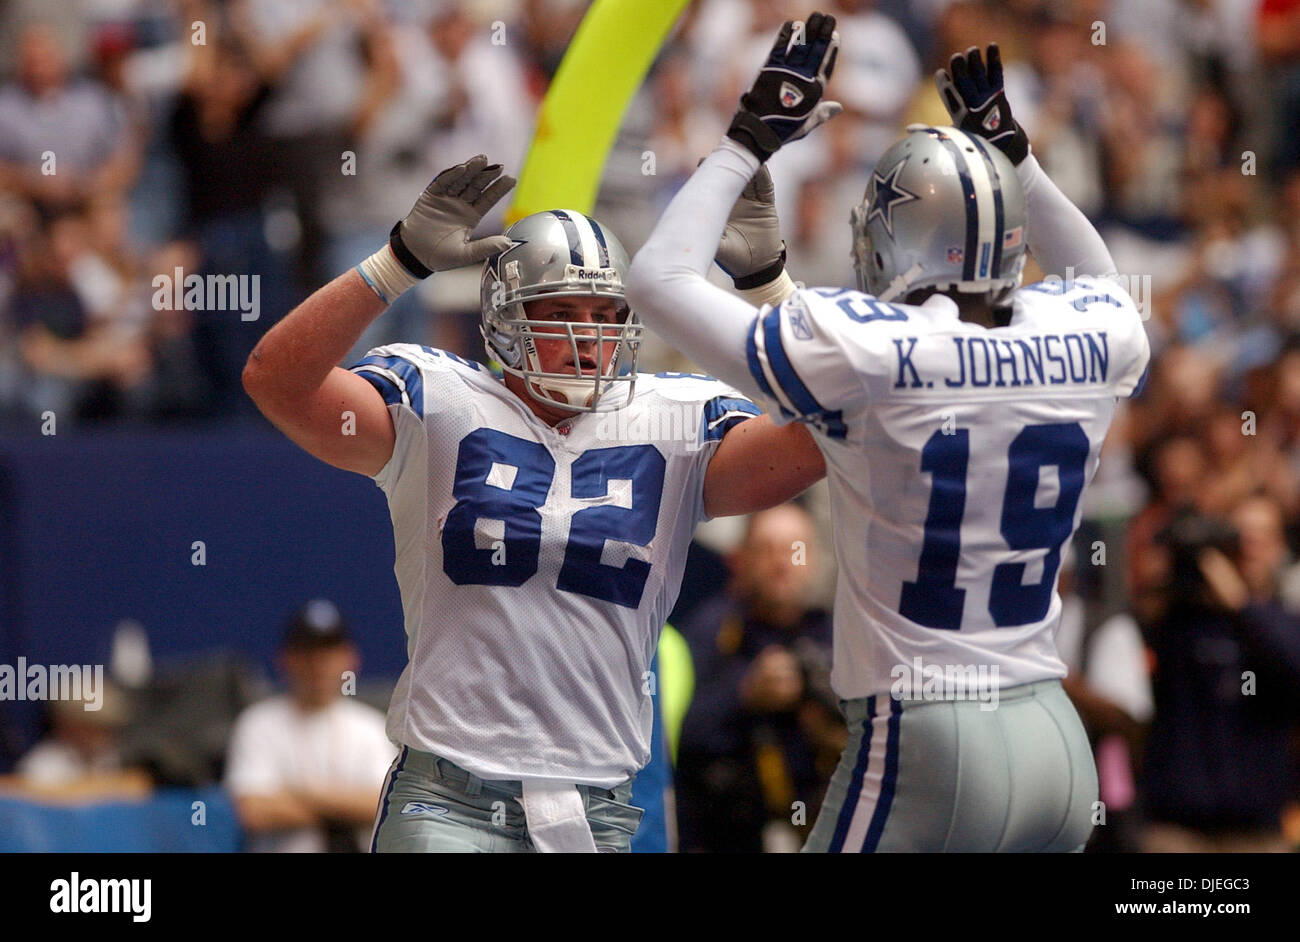 Oct 31, 2004; Irving, TX, USA; NFL Football: The Dallas Cowboys